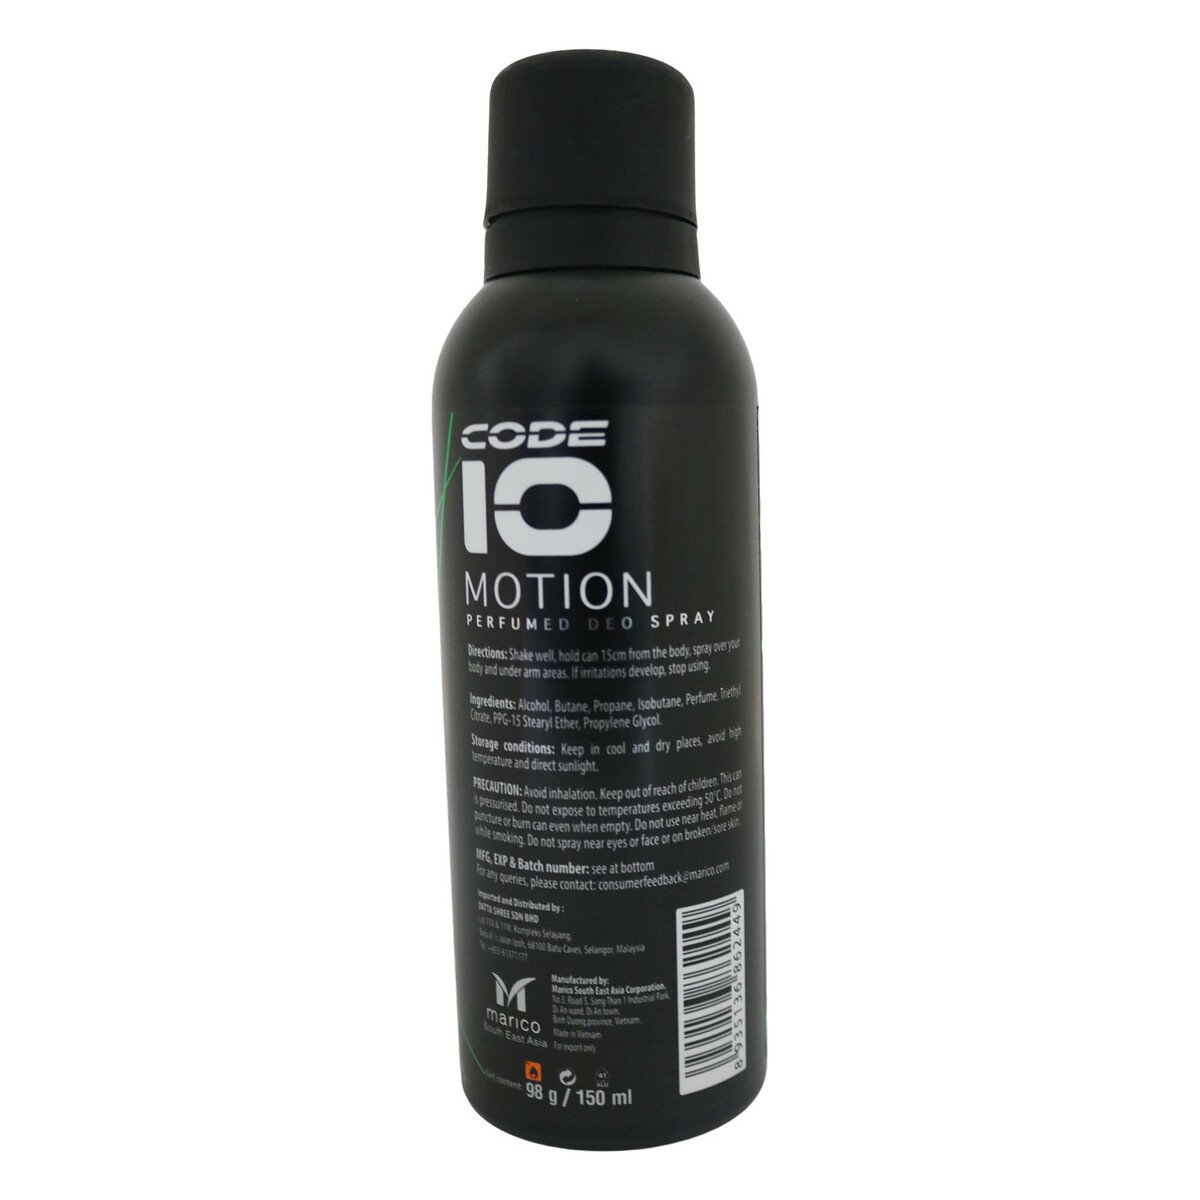 Code 10 Perfume Motion Deodorant Spray 150ml